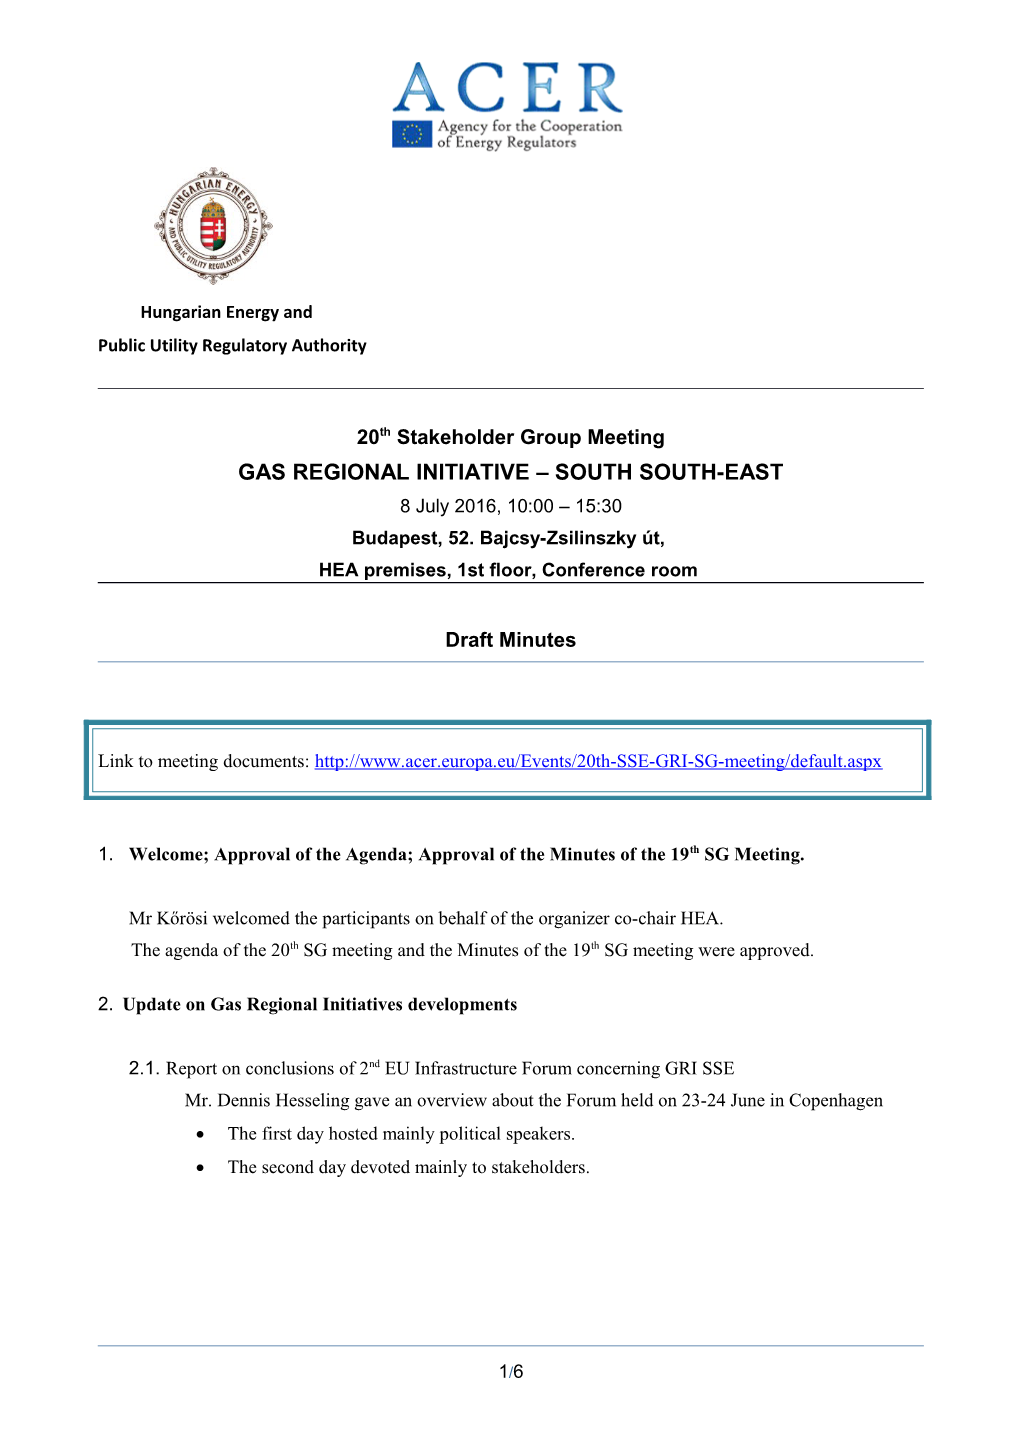 20Th GRI SSE SG Meeting Final Draft Minutes